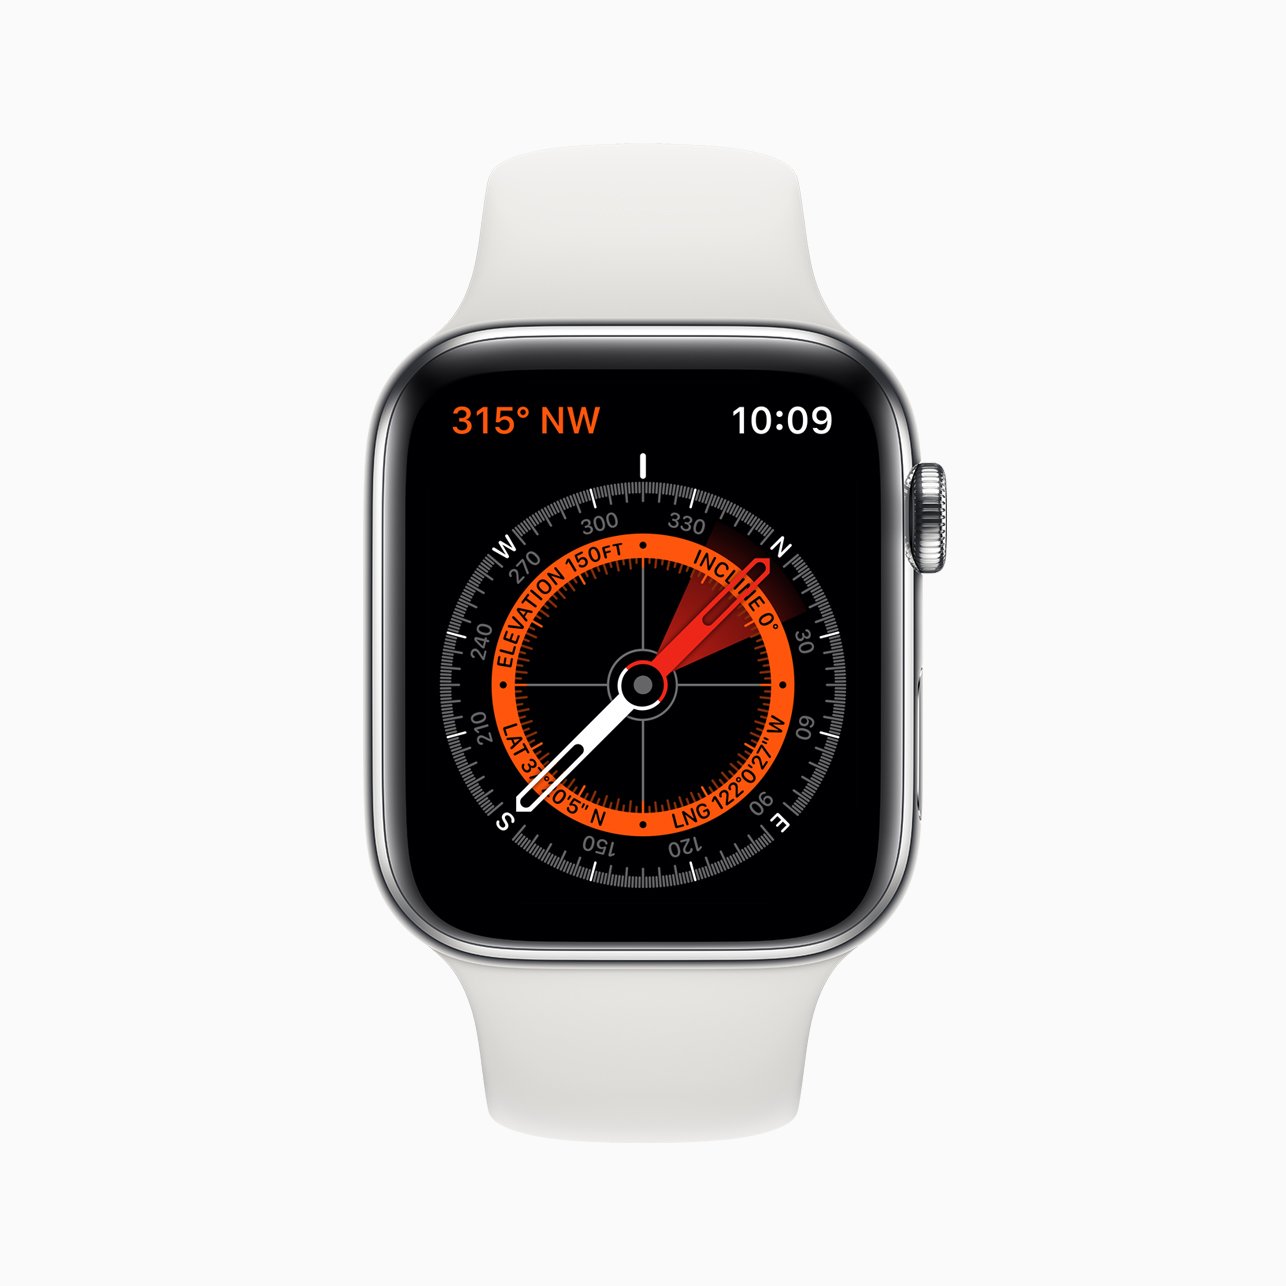 Apple Watch series 5 compass